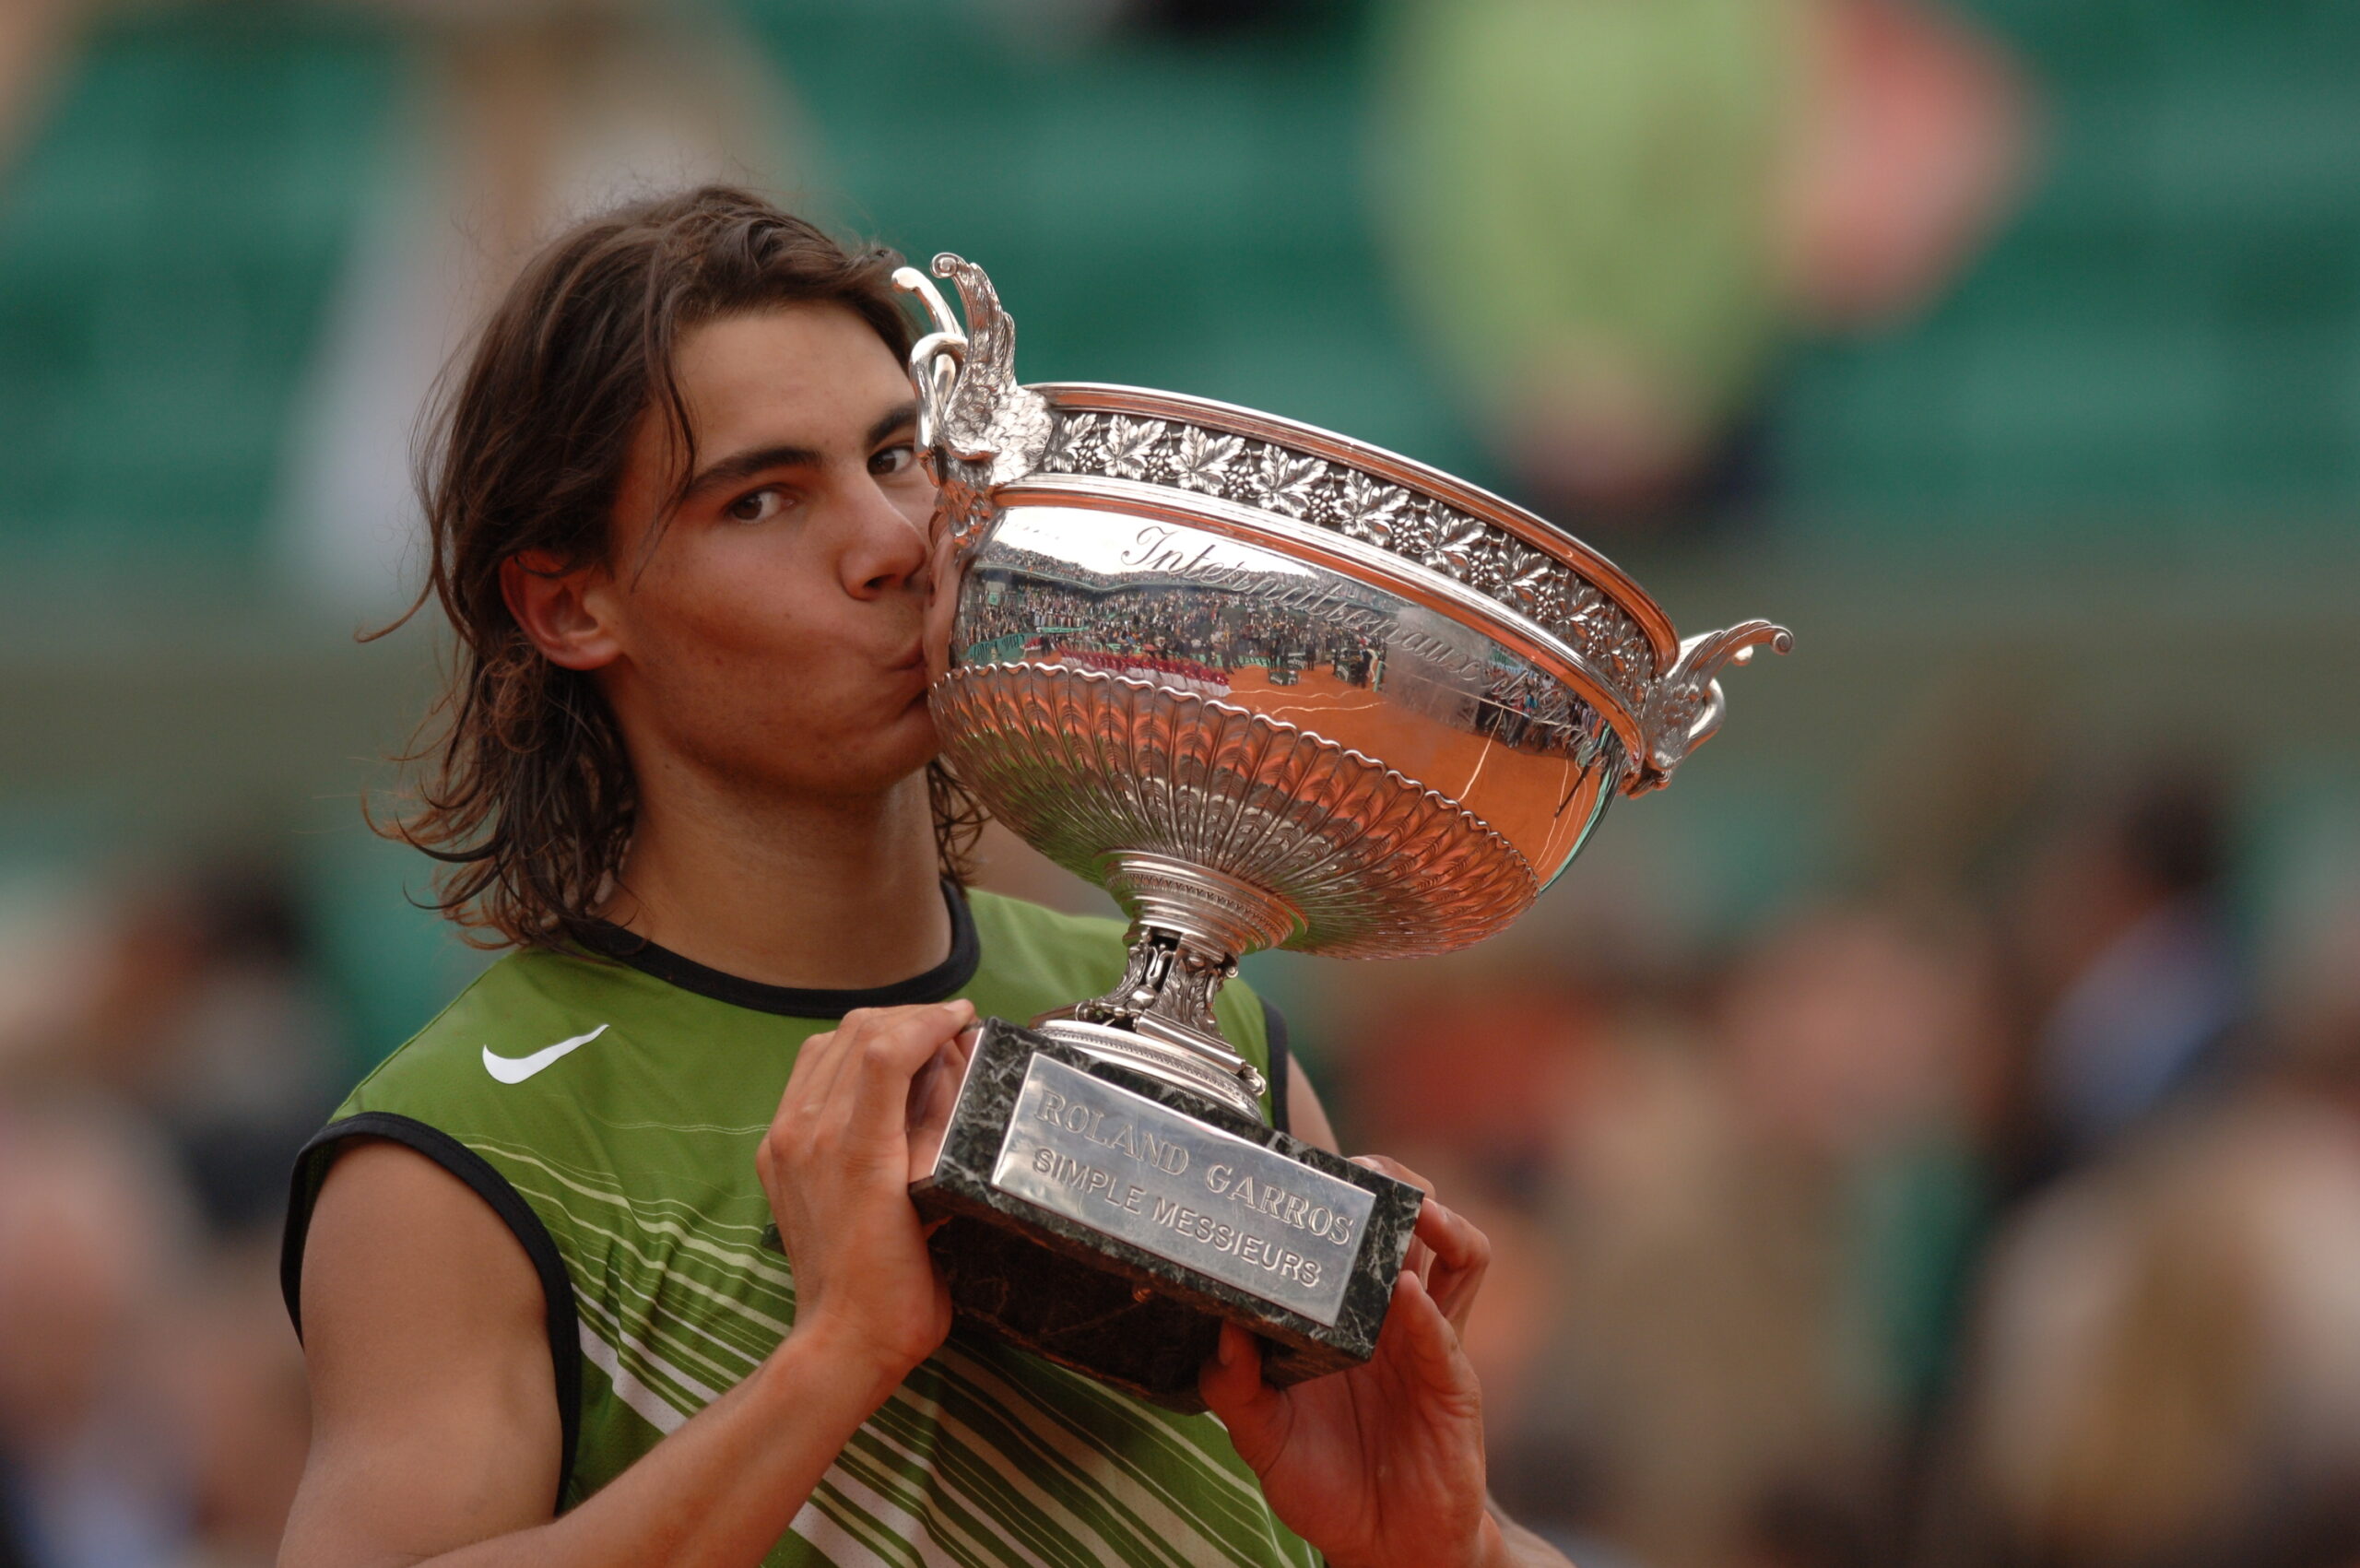 Grand Slam Champion Rafael Nadal in the 2005 French Open